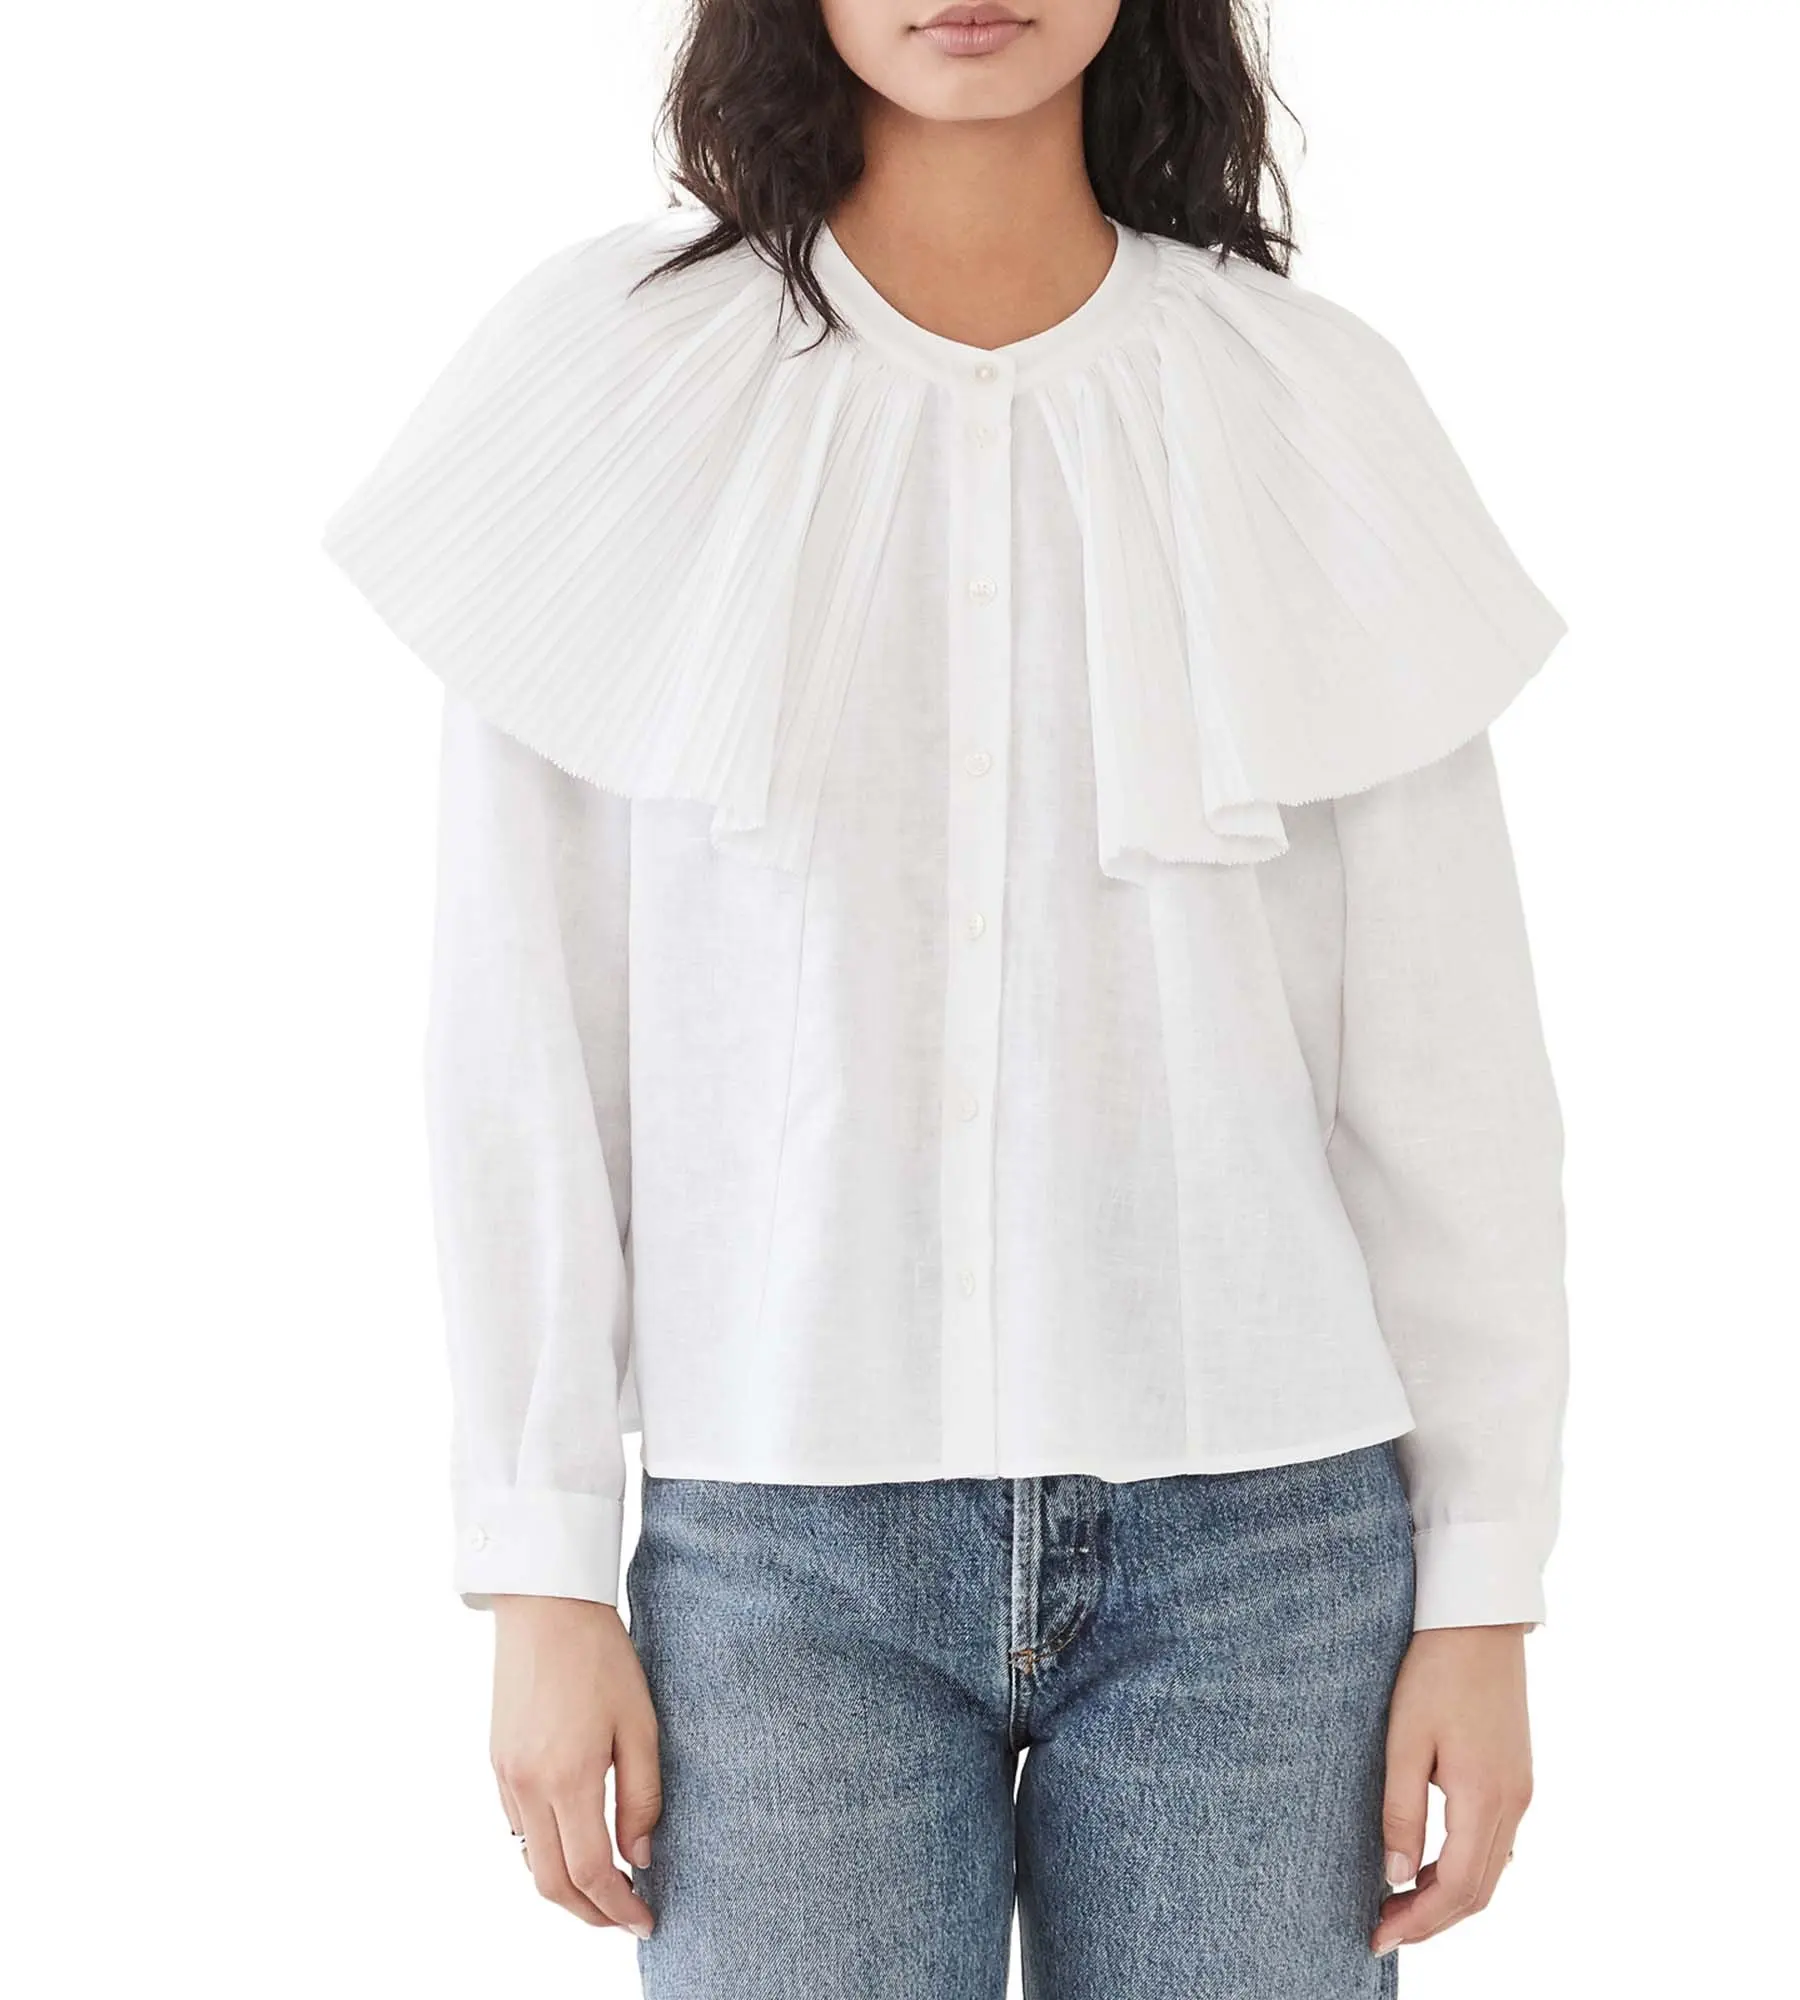 Blusa de manga larga abullonada para mujer al por mayor, escote redondo con capa plisada superpuesta, blusas blancas de manga larga